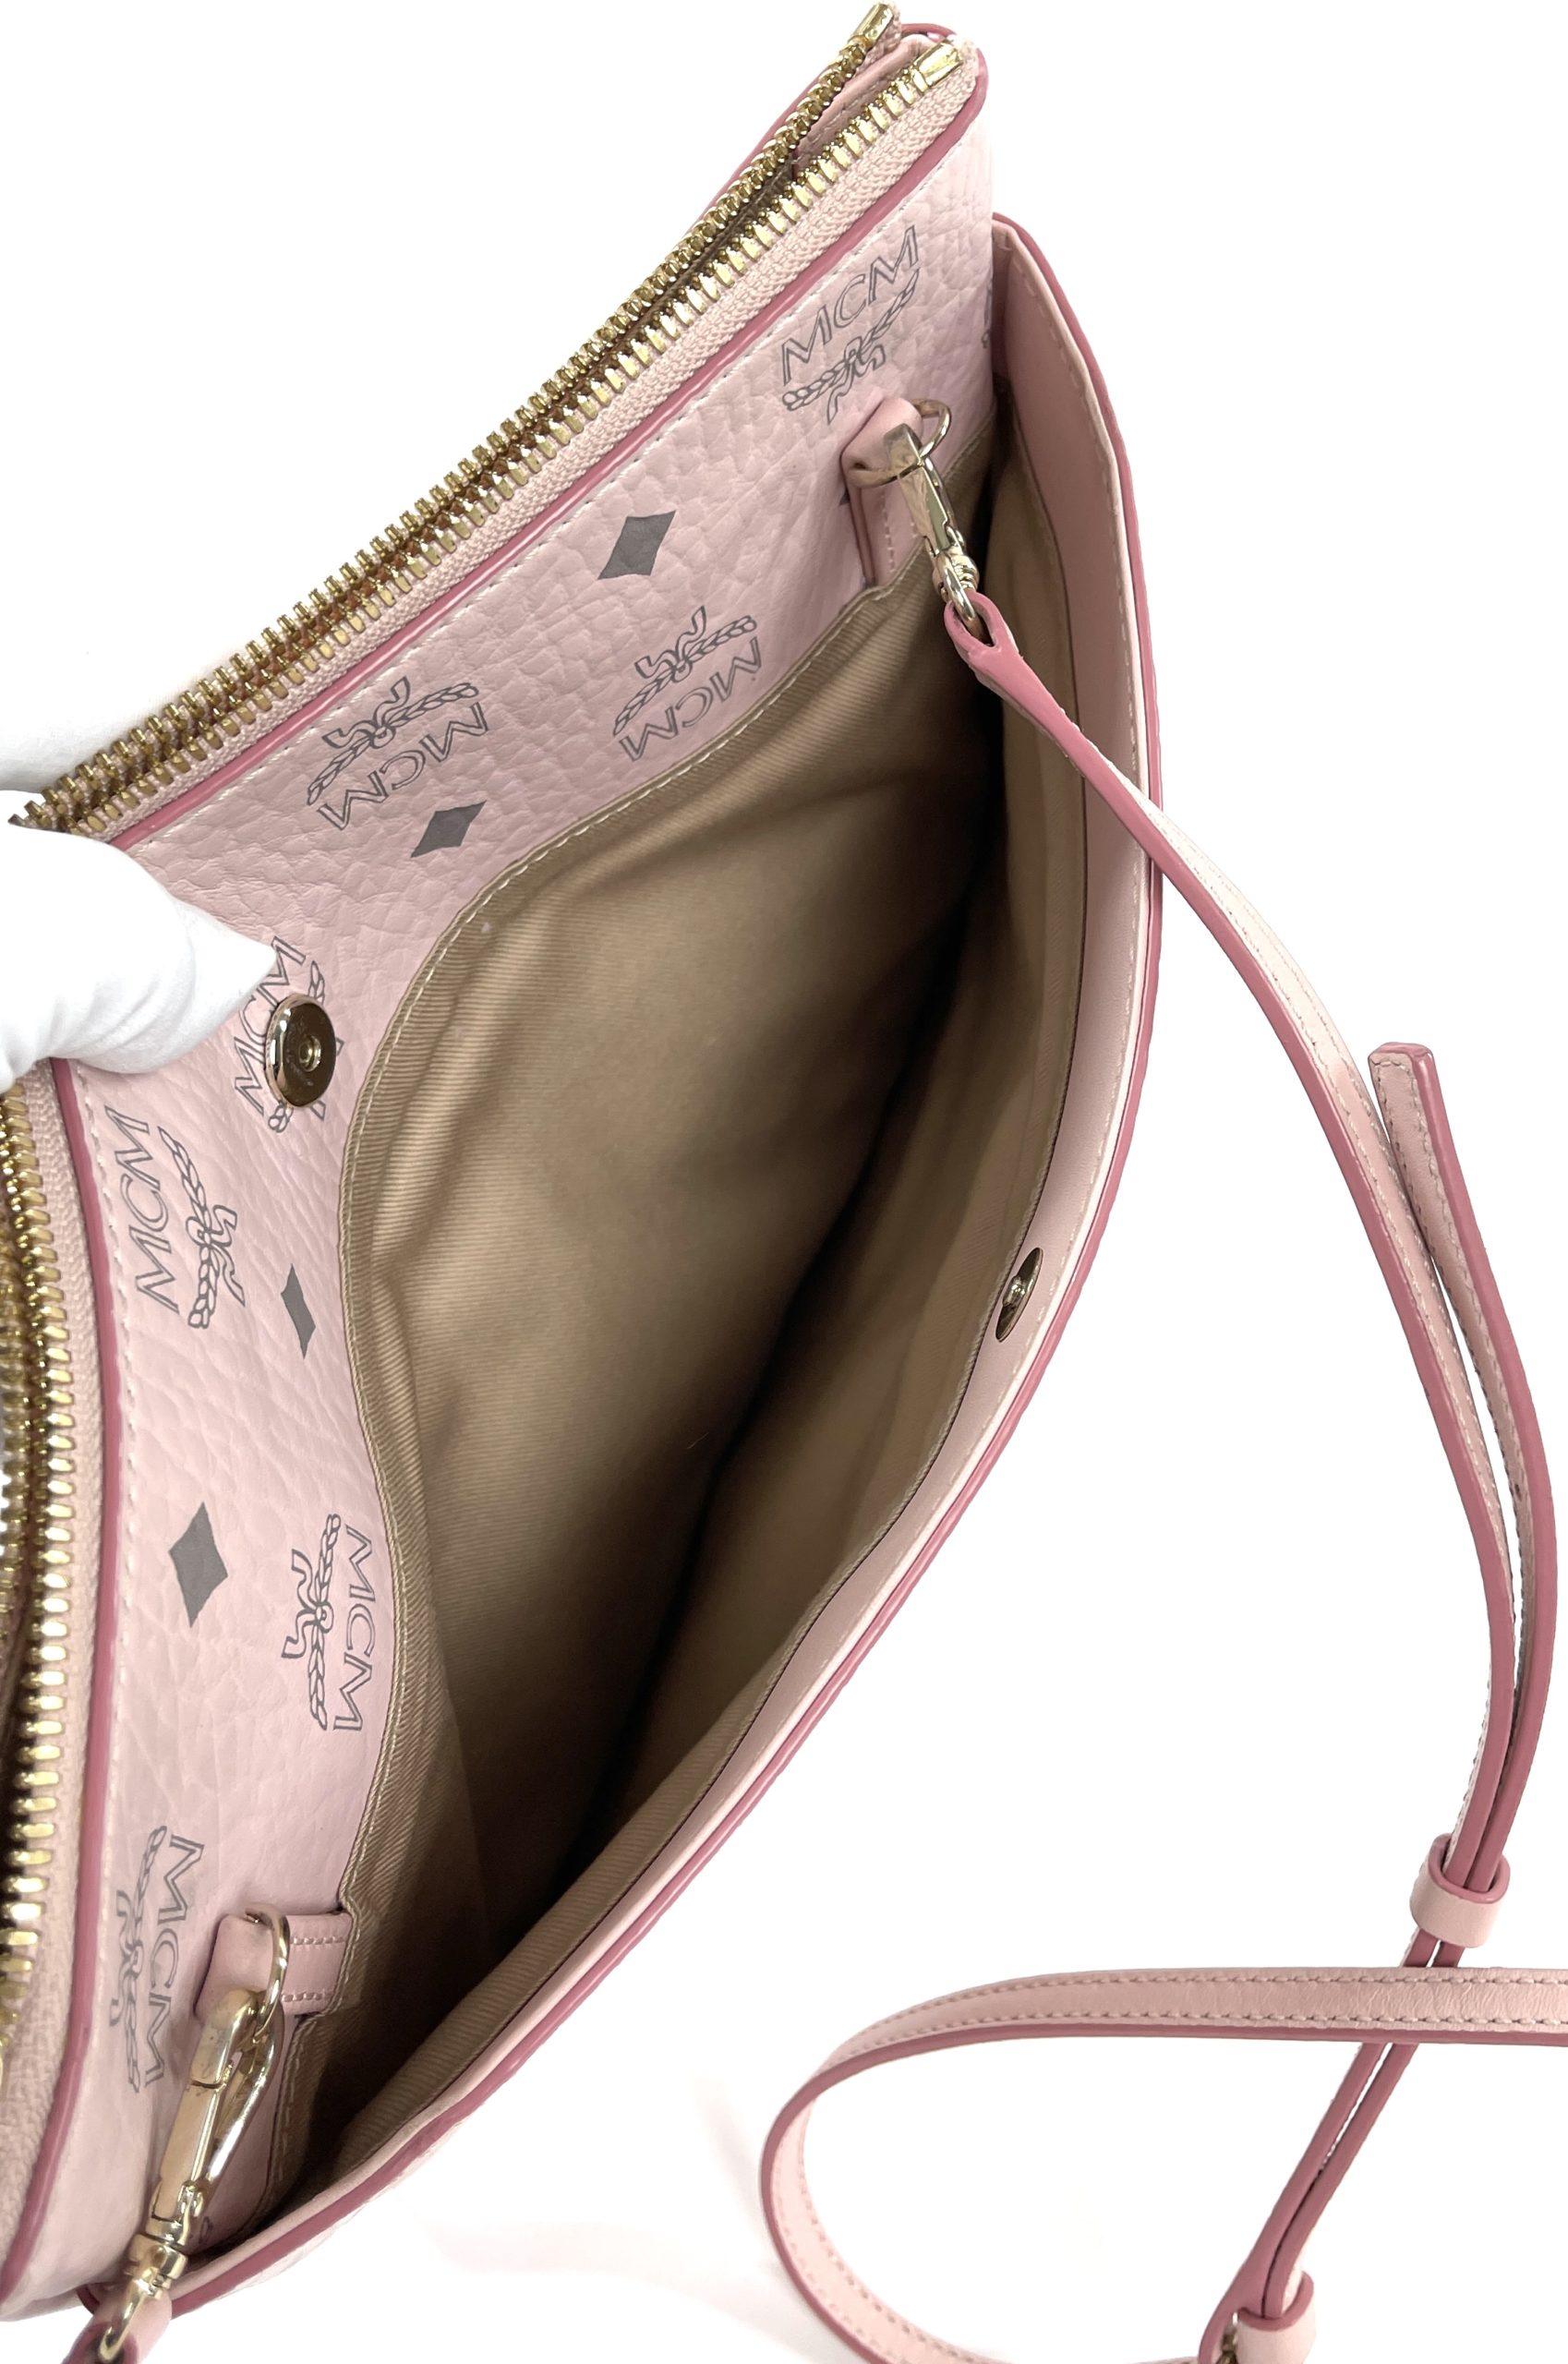 MCM Visetos Original Authentic Crossbody Bag Pouch Powder Pink NEW SEALED